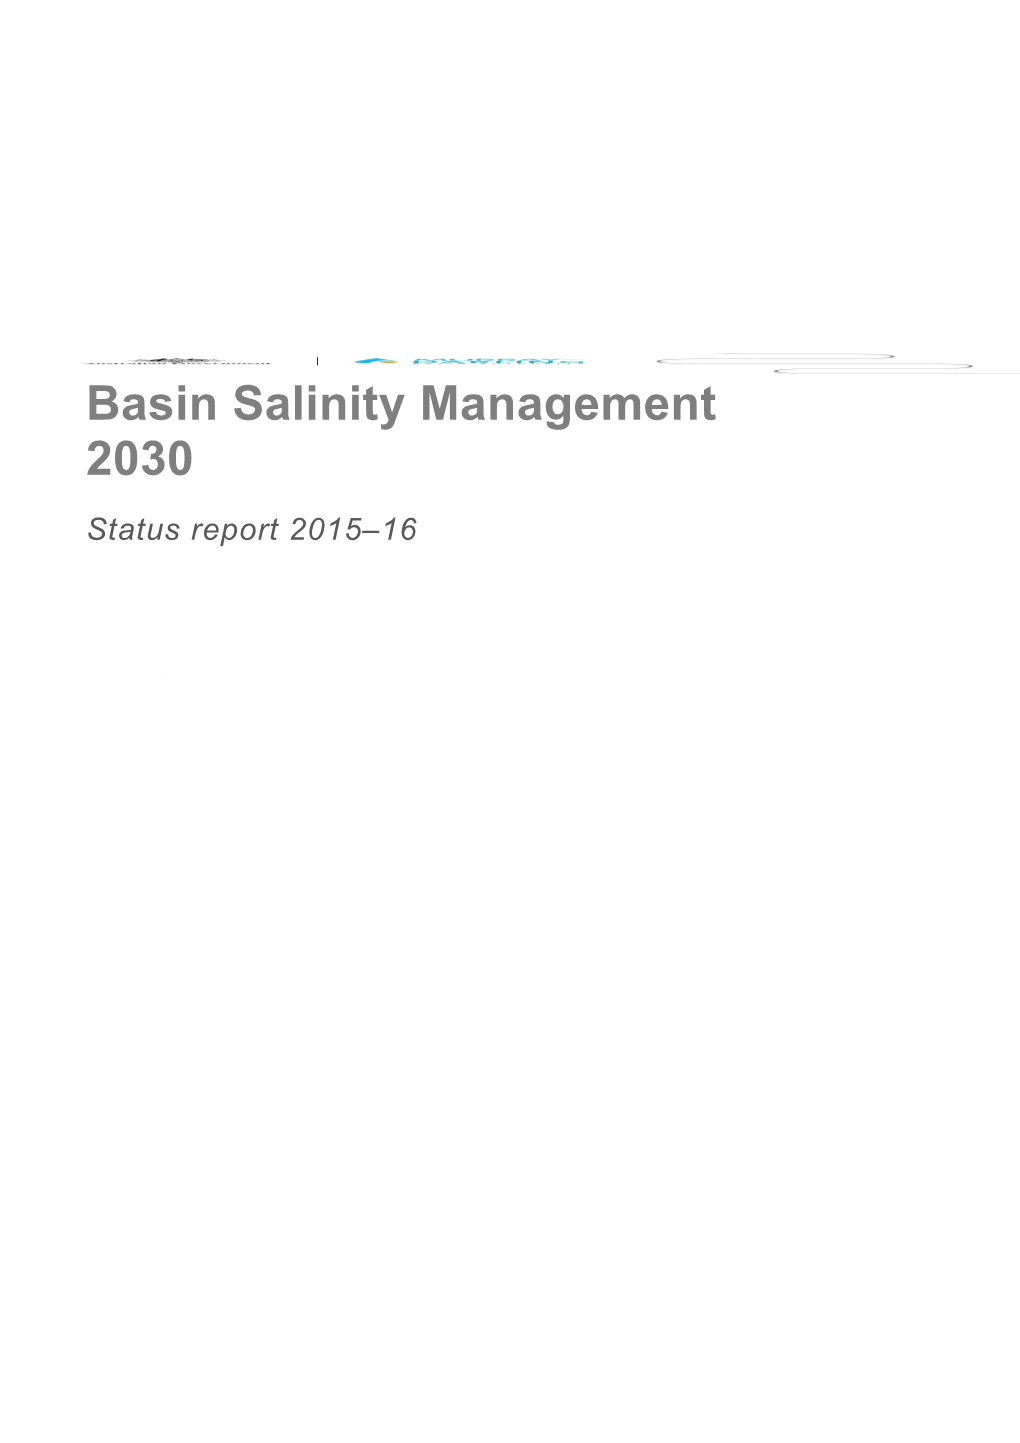 Murray-Darling Basin Authority Basin Salinity Management (BSM)2030 Annual Status Report 2015-16